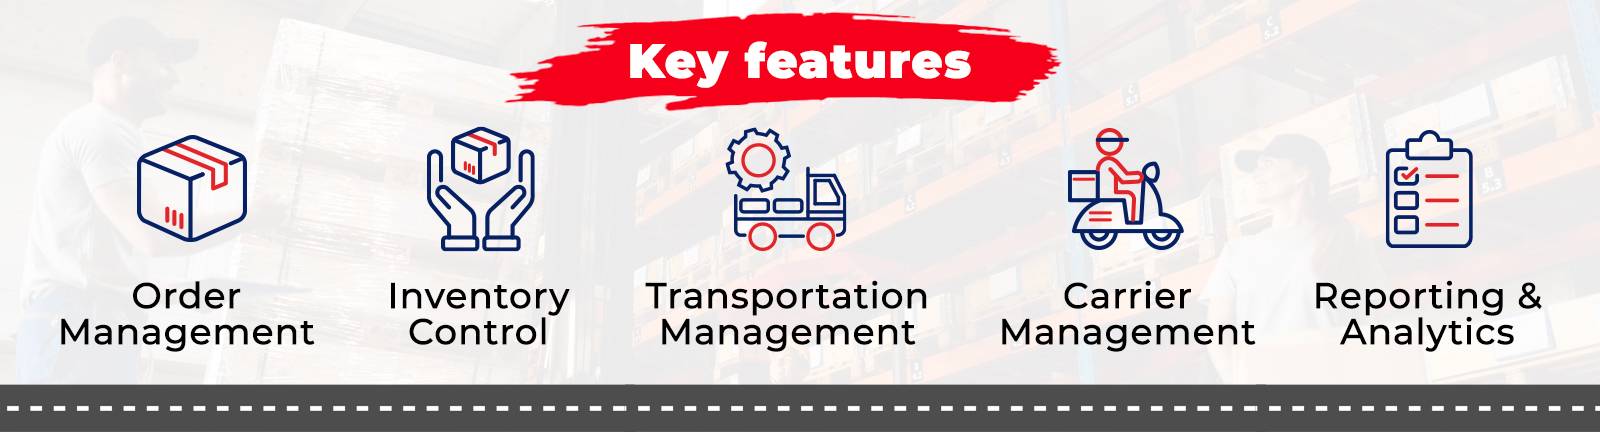 Key features of Logistics management software